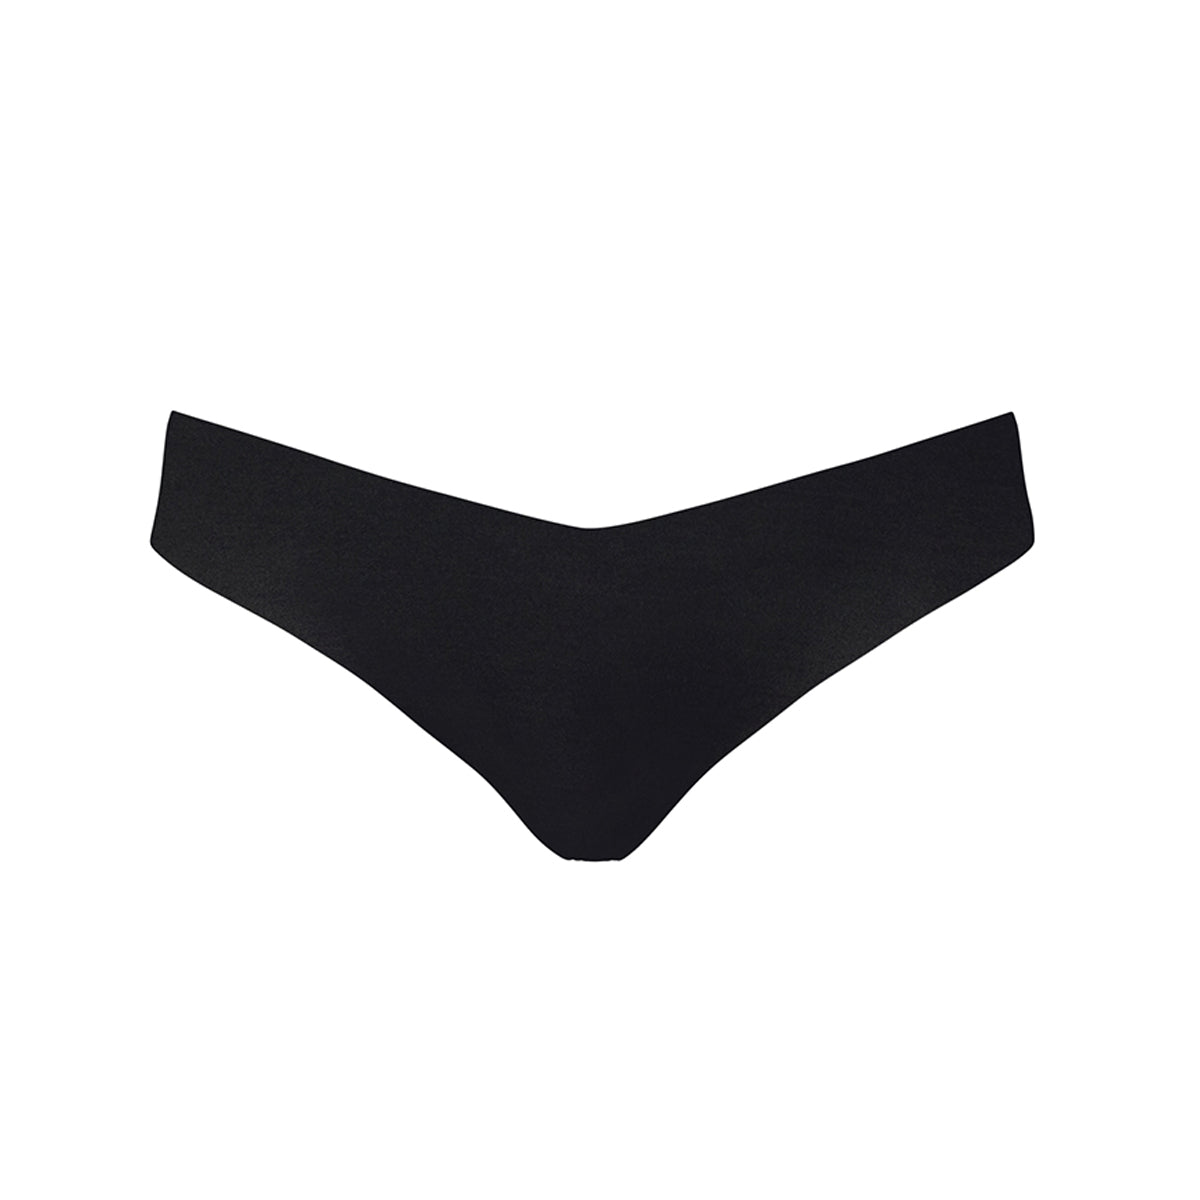 Commando black thong better than nothing seamless underwear lingerie canada linea intima toronto wearcommando